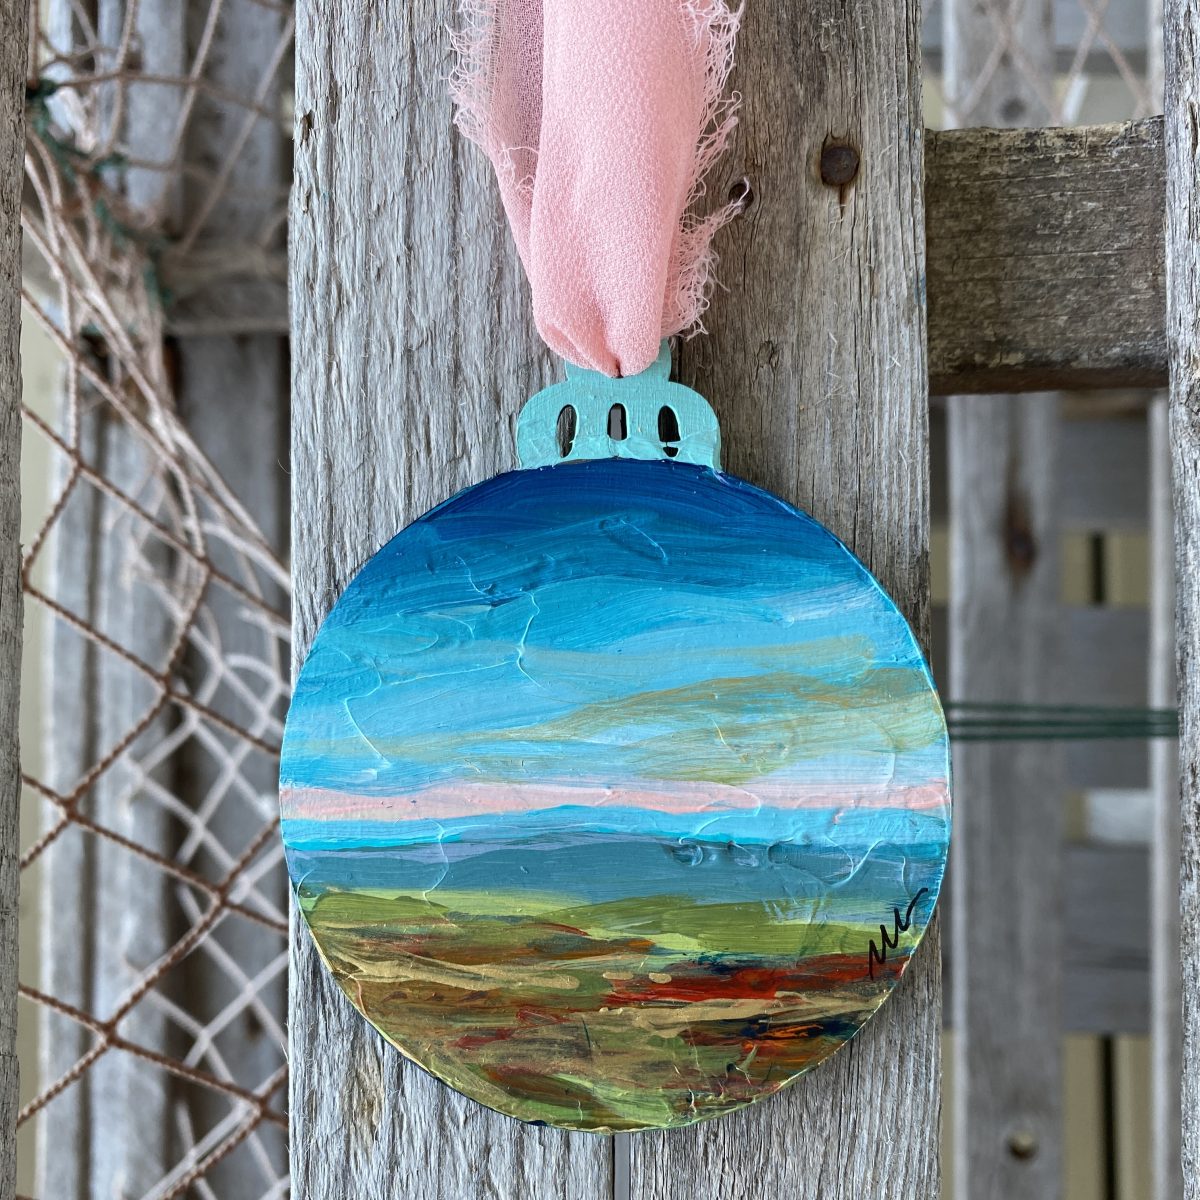 Melinda by The Sea: Christmas Ornaments!